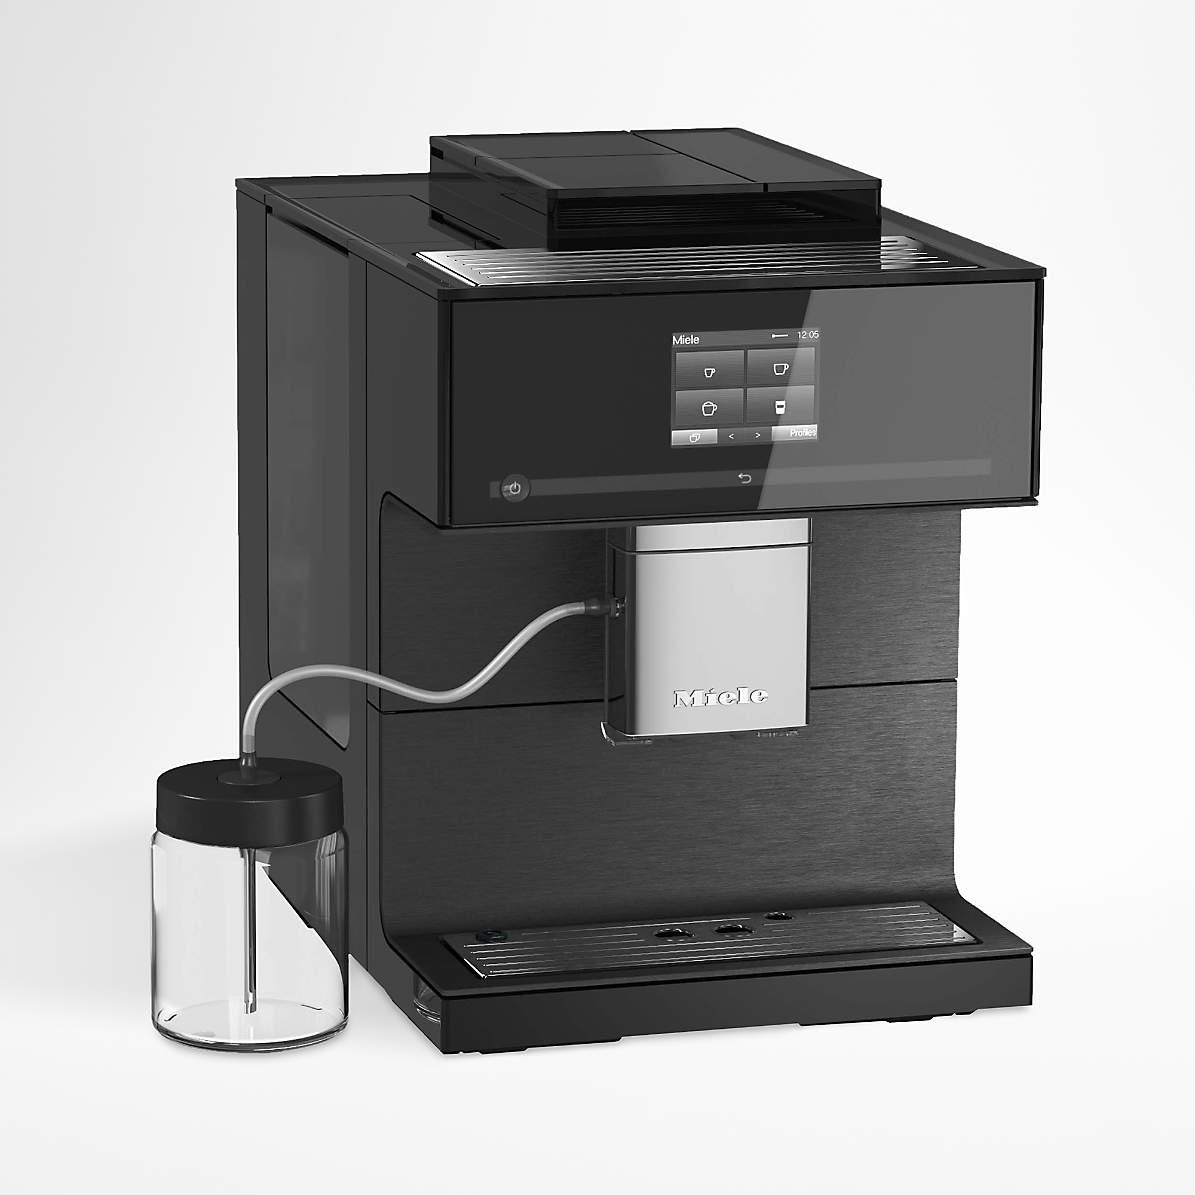 Filter coffee machine E7CM1-50GB - Black